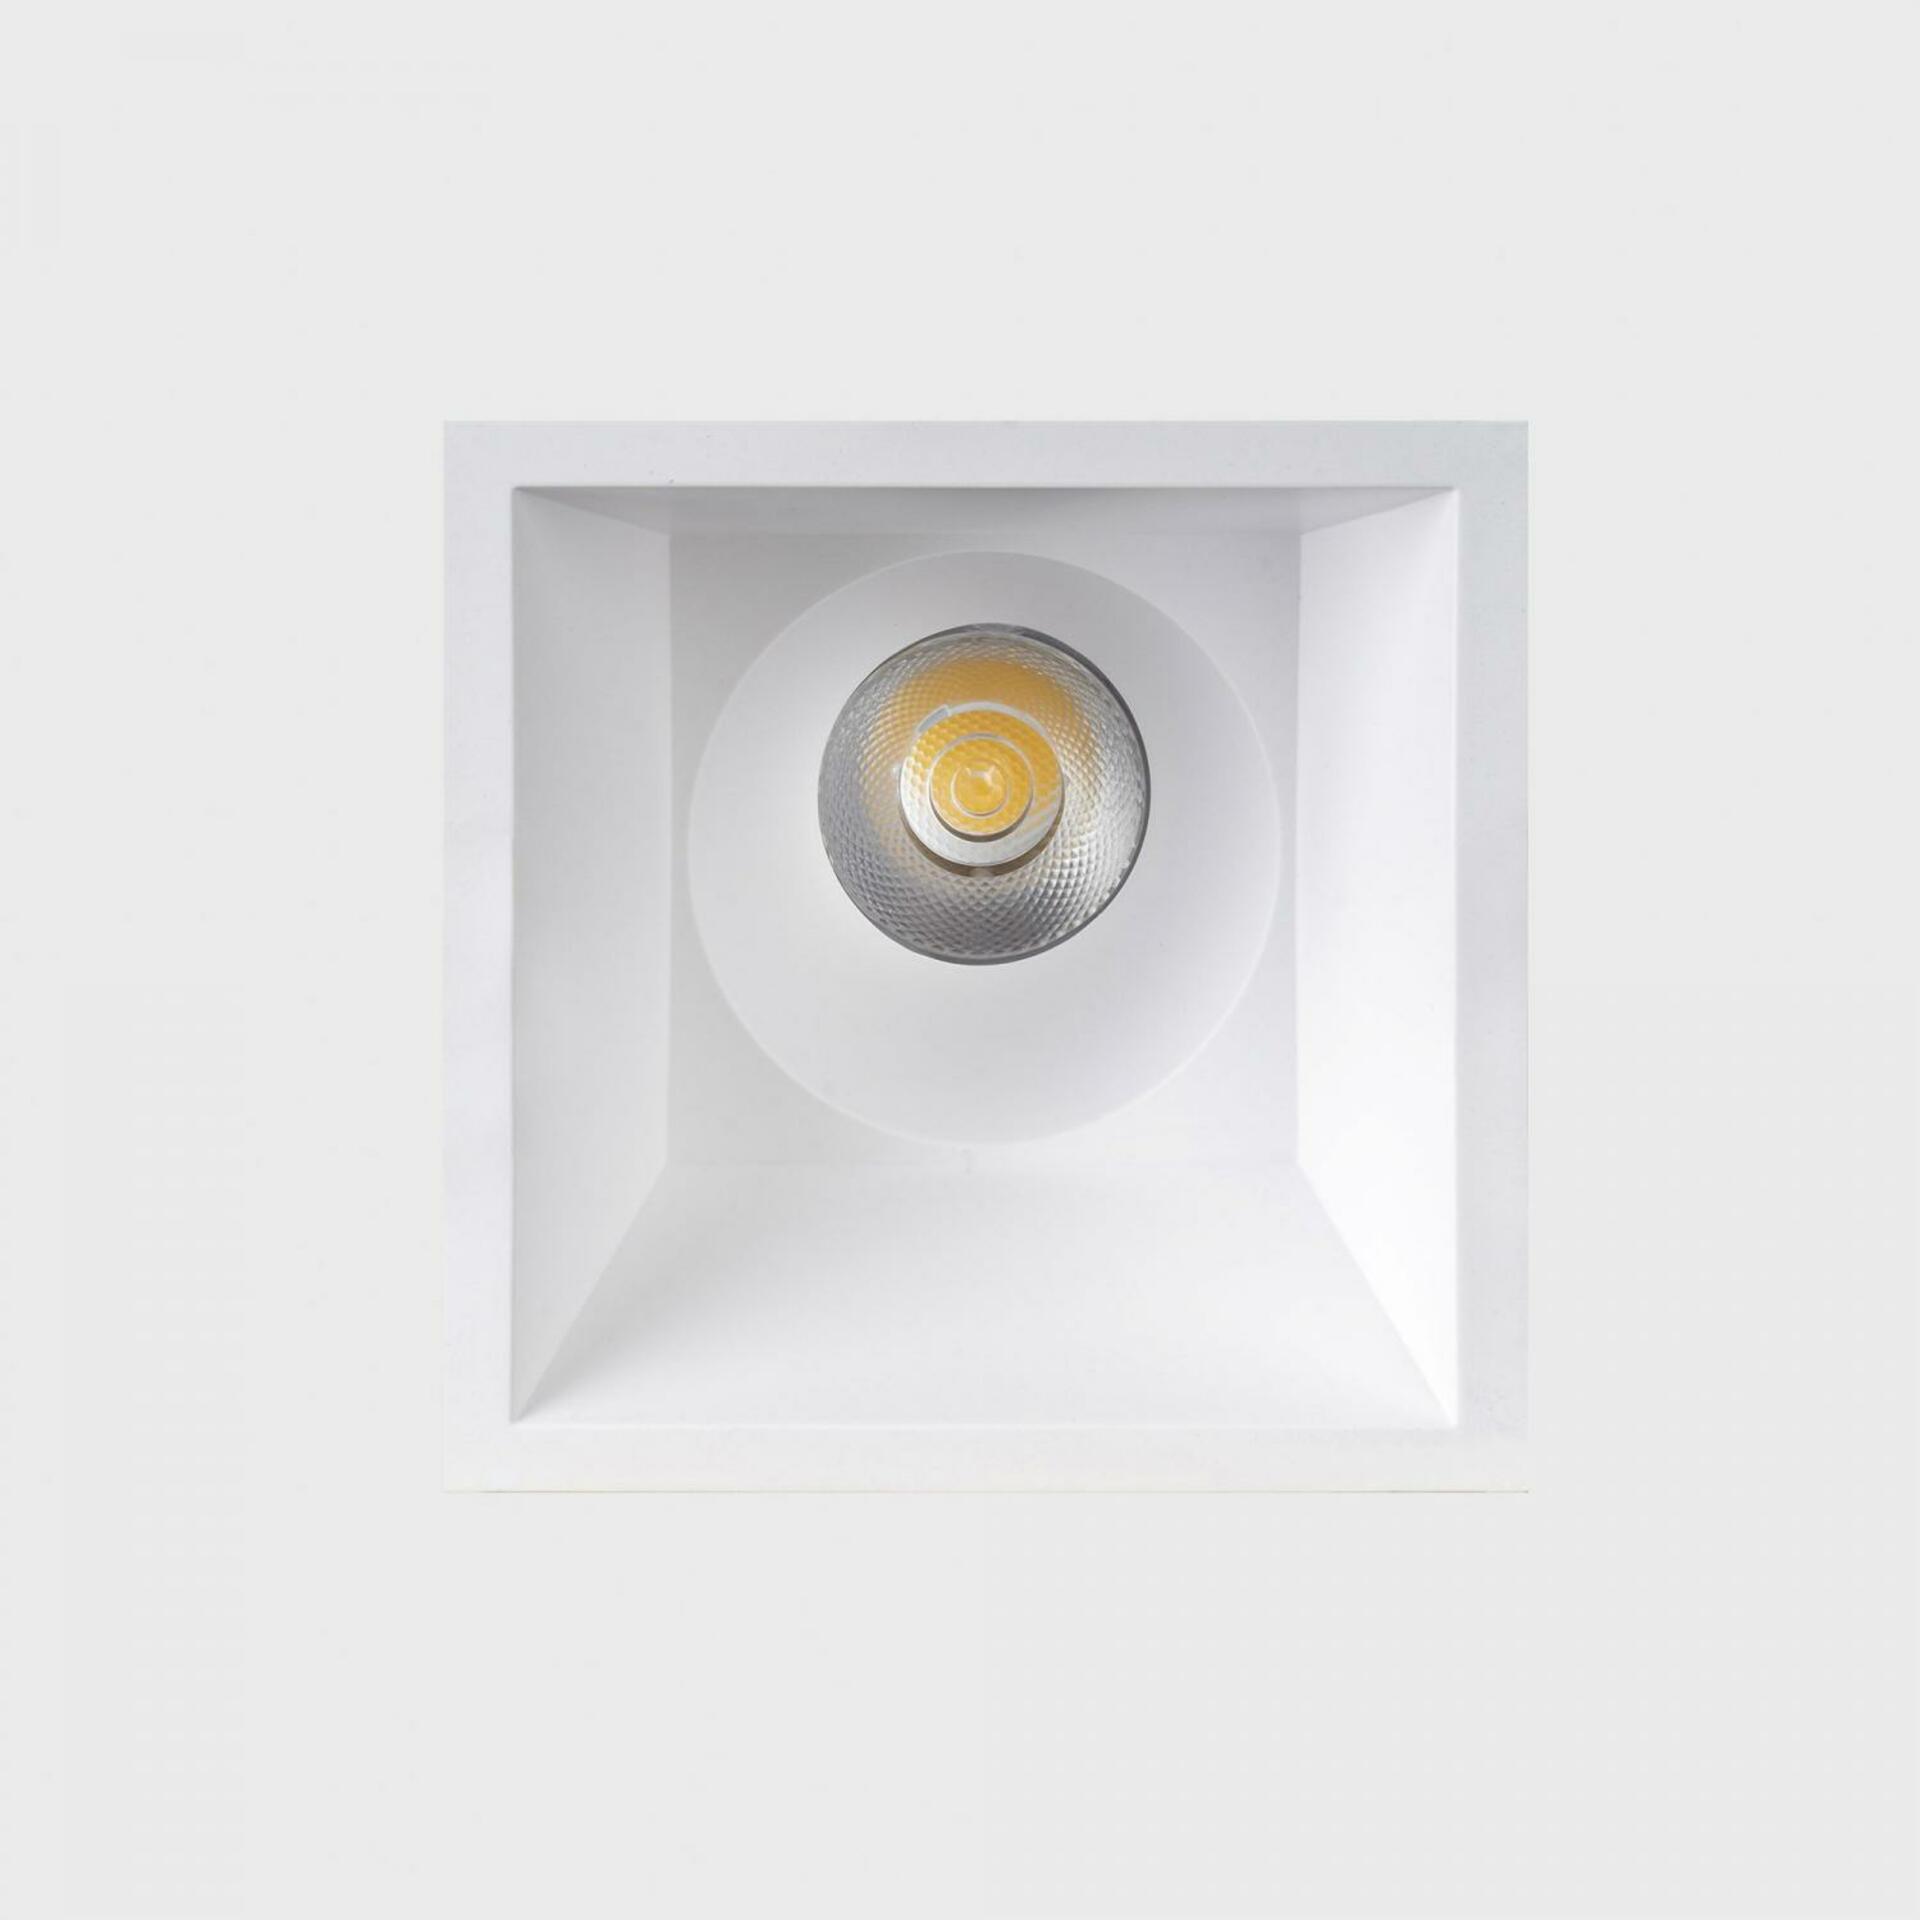 KOHL LIGHTING KOHL-Lighting NOON SQ ASYMETRIC zapuštěné svítidlo s rámečkem 93x93 mm bílá 38° 5 W  CRI 80 4000K 1.10V